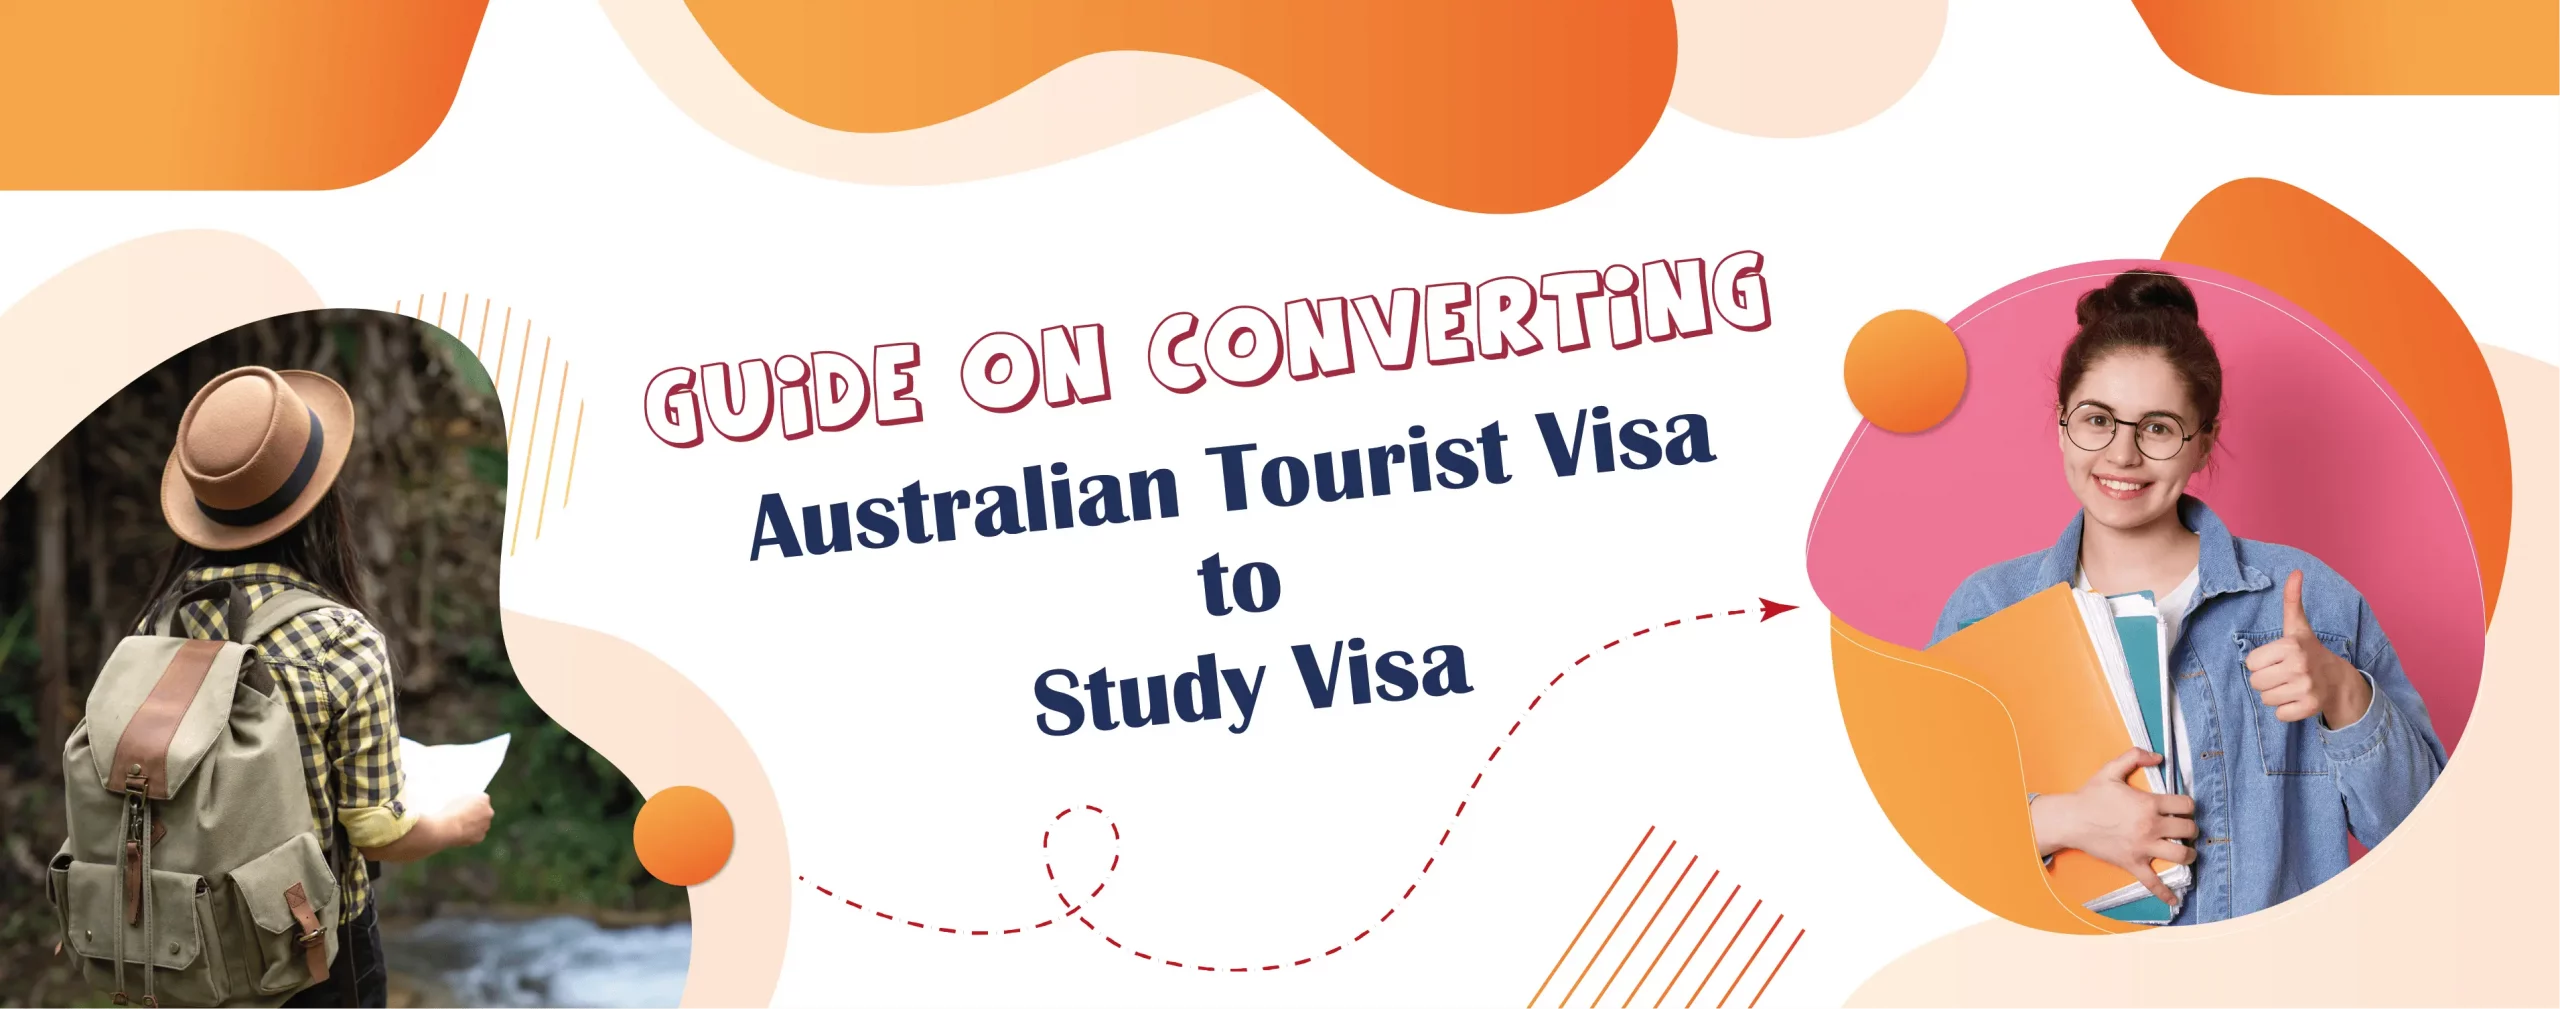 Guide on Converting Australian Tourist Visa to Study Visa